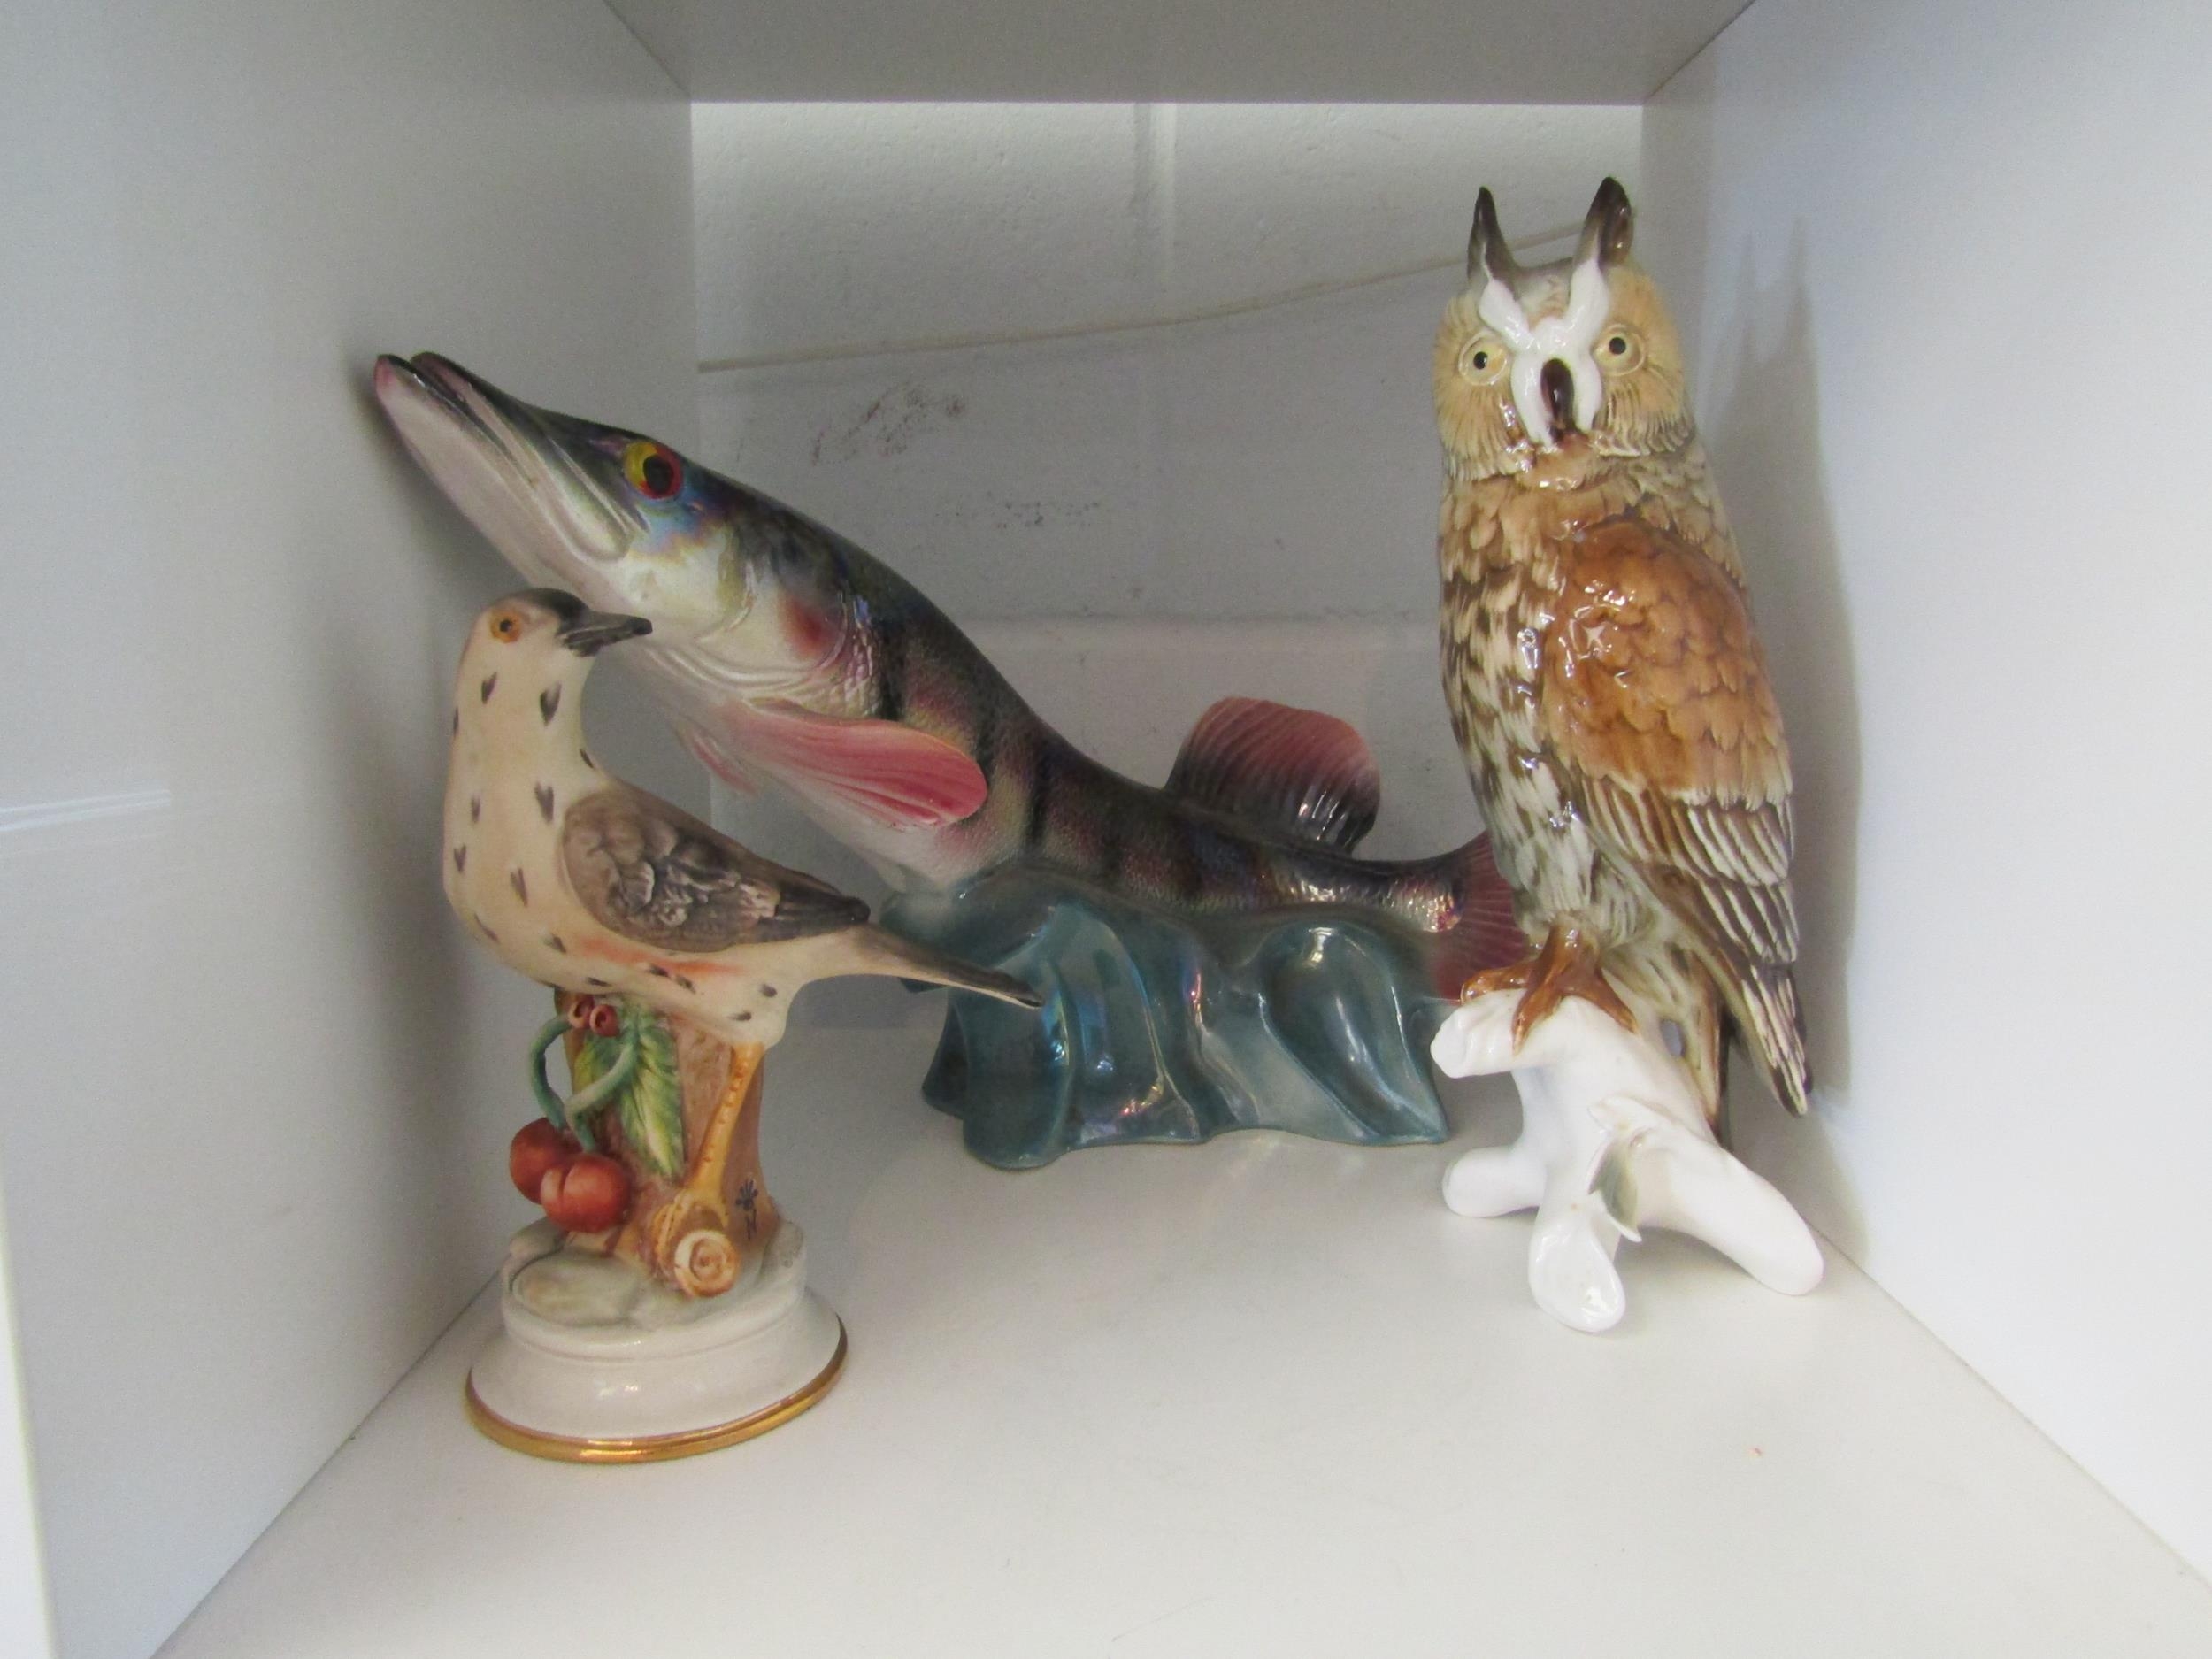 An iridescent ceramic figure of a pike 39cm long, a ceramic figure of an owl on branch 26cm tall and